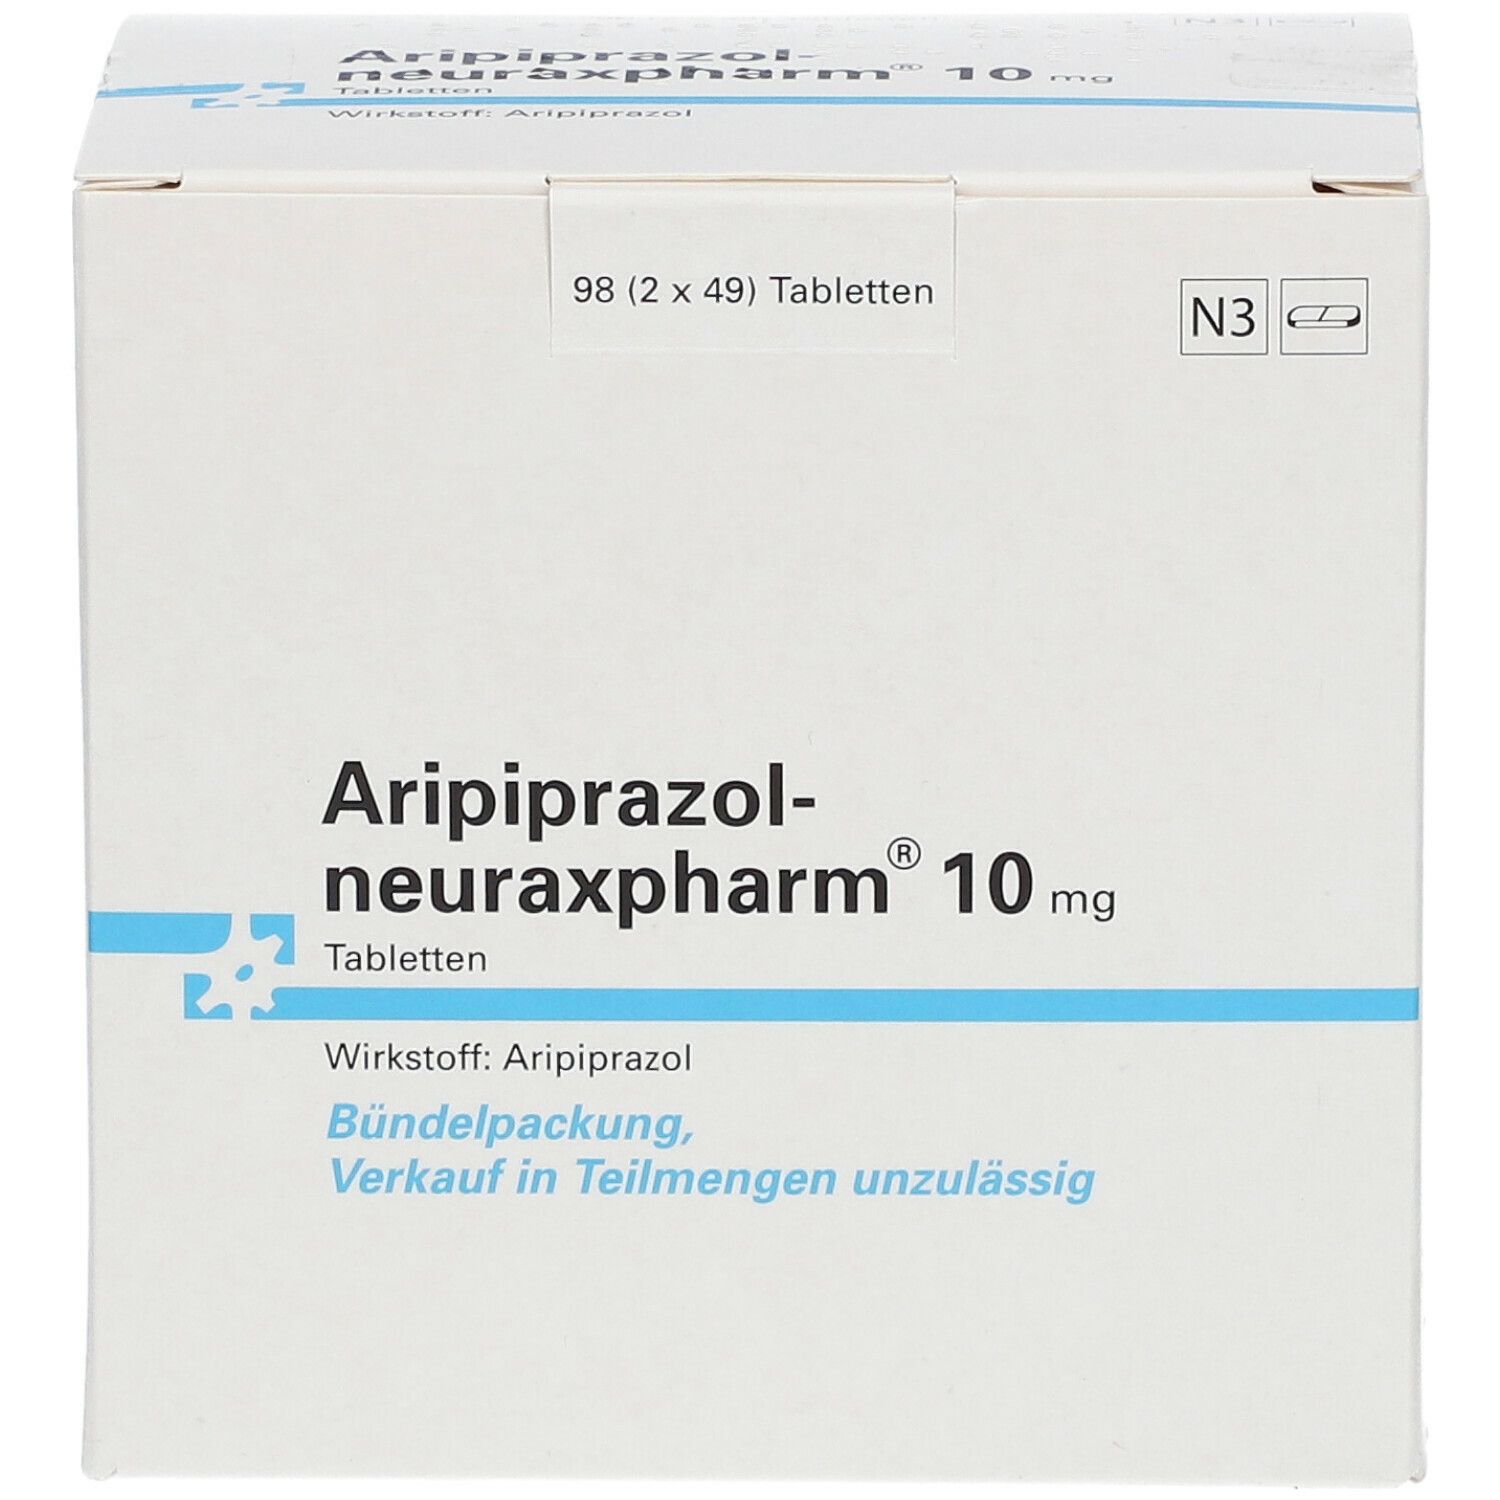 Aripiprazol-neuraxpharm® 10 mg